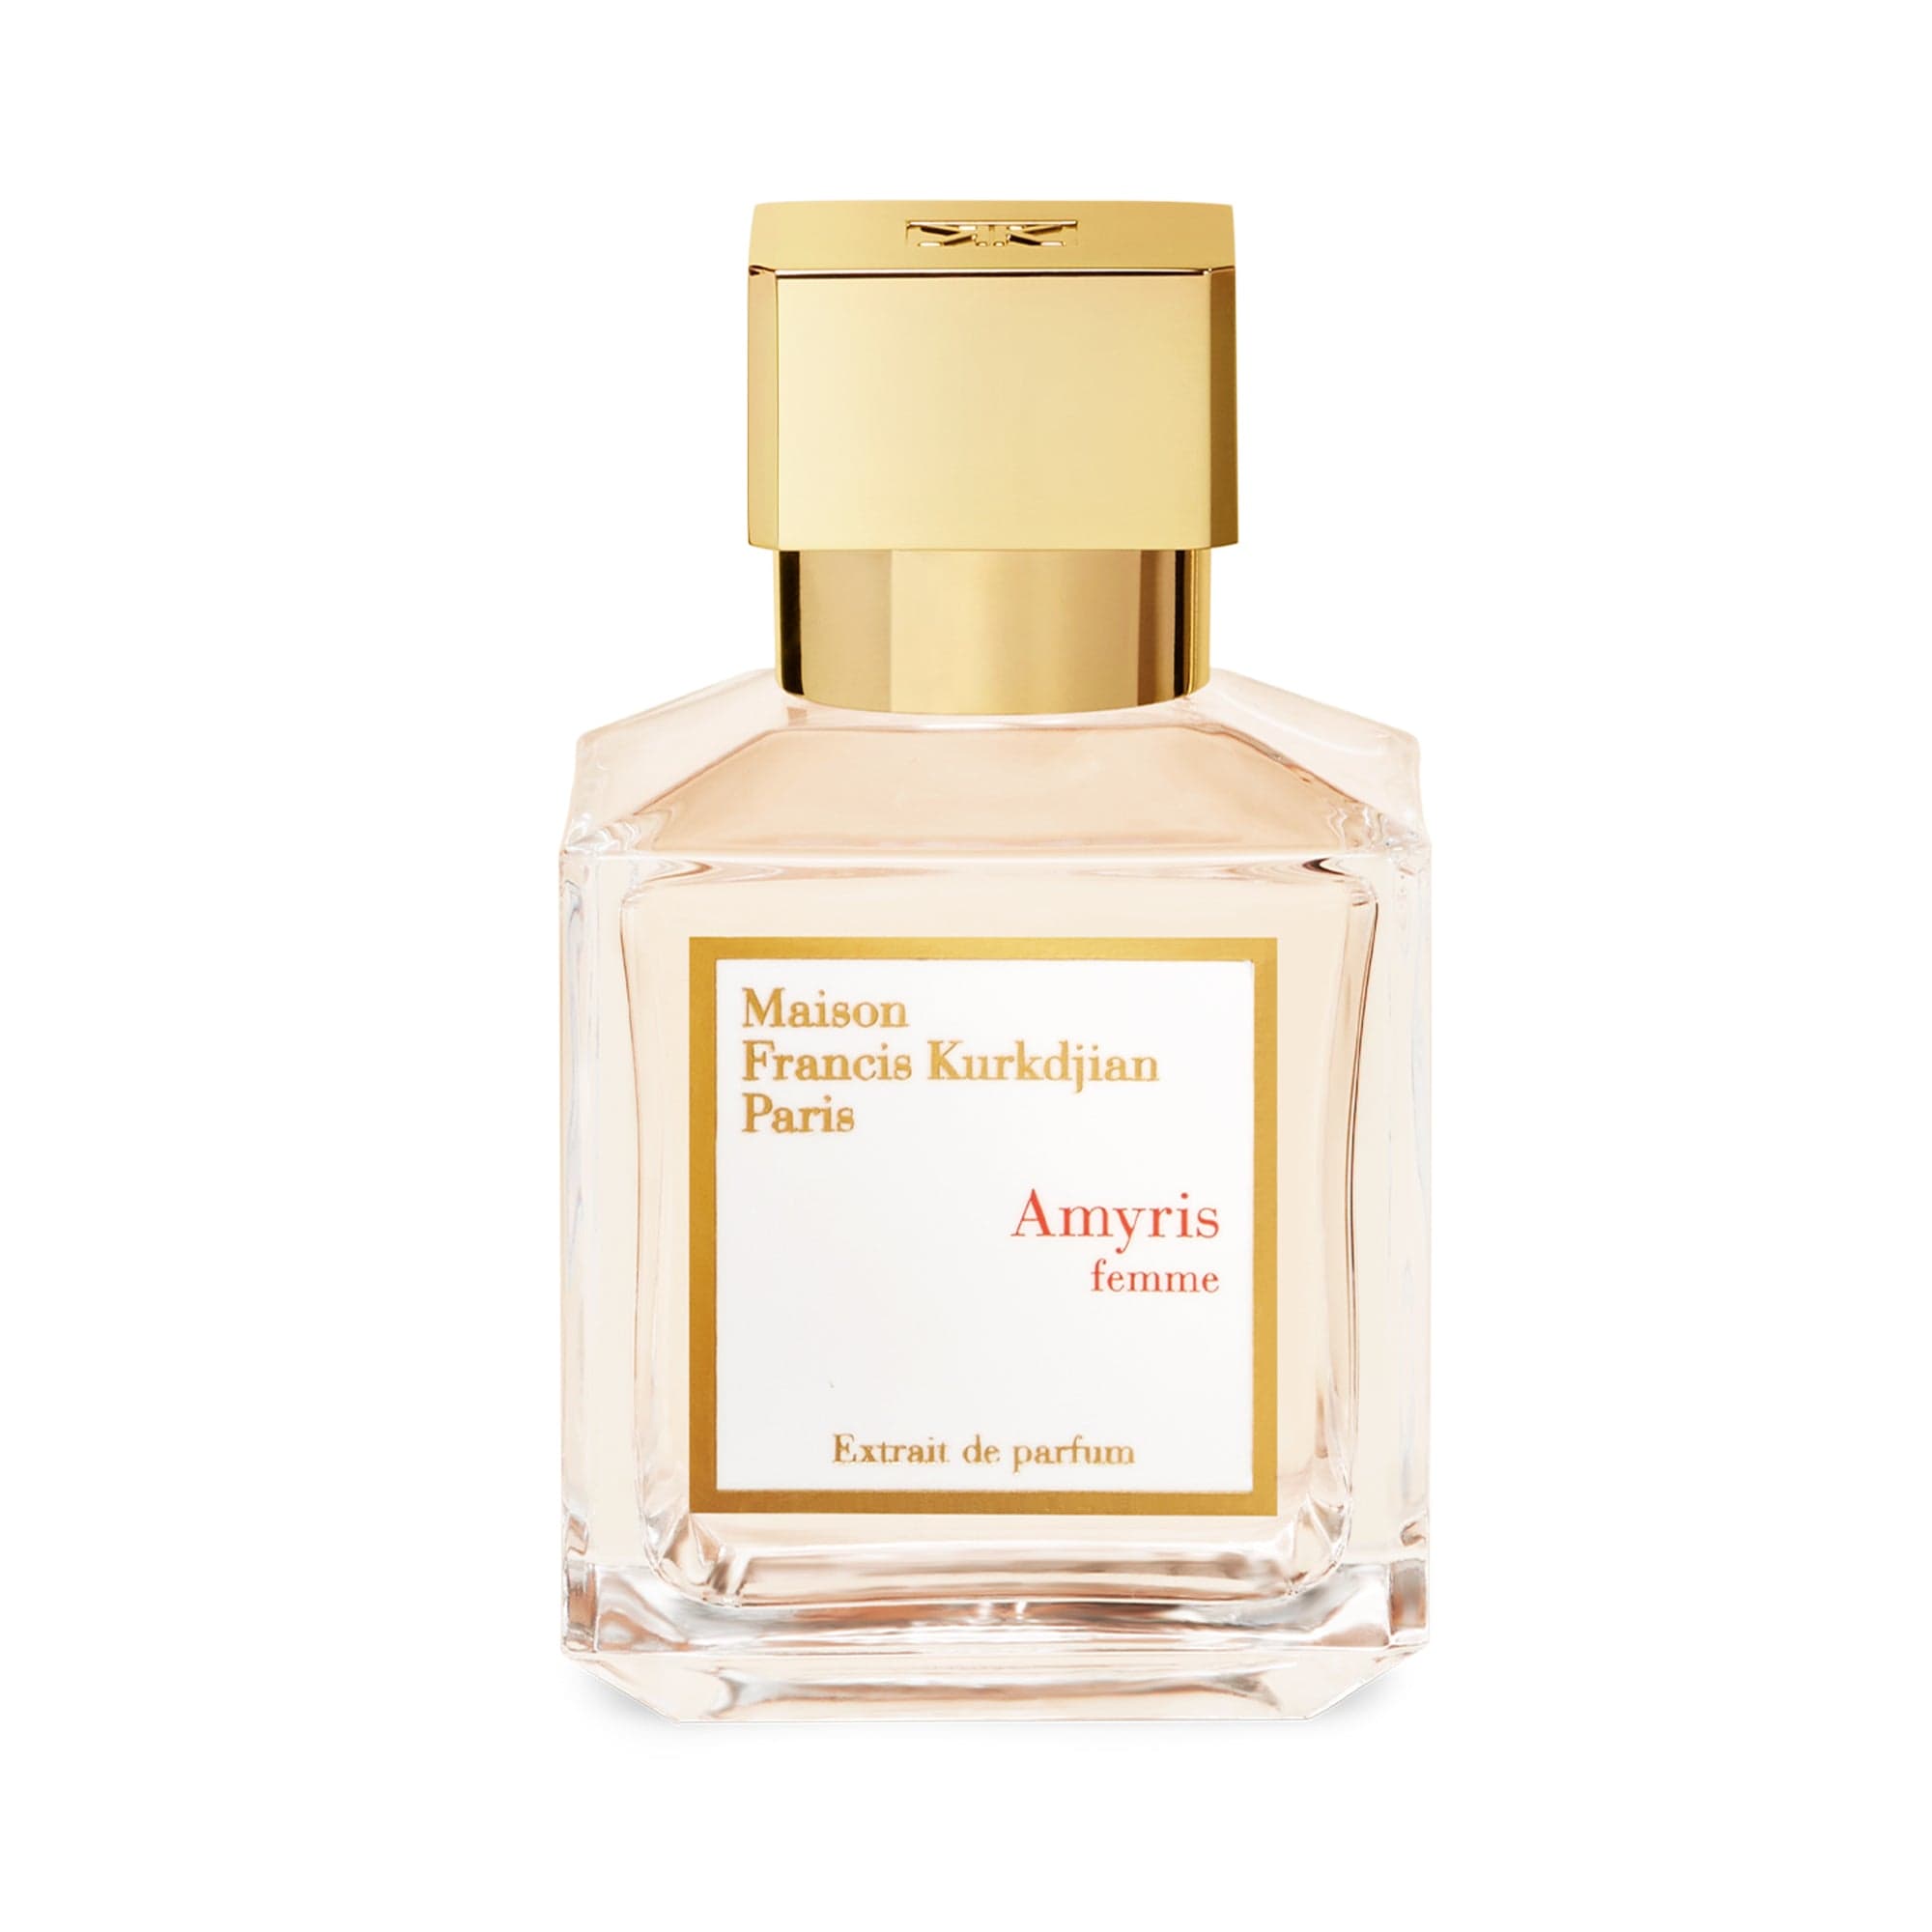 Amyris Femme Extracto de Perfume de Maison Francis Kurkdjian